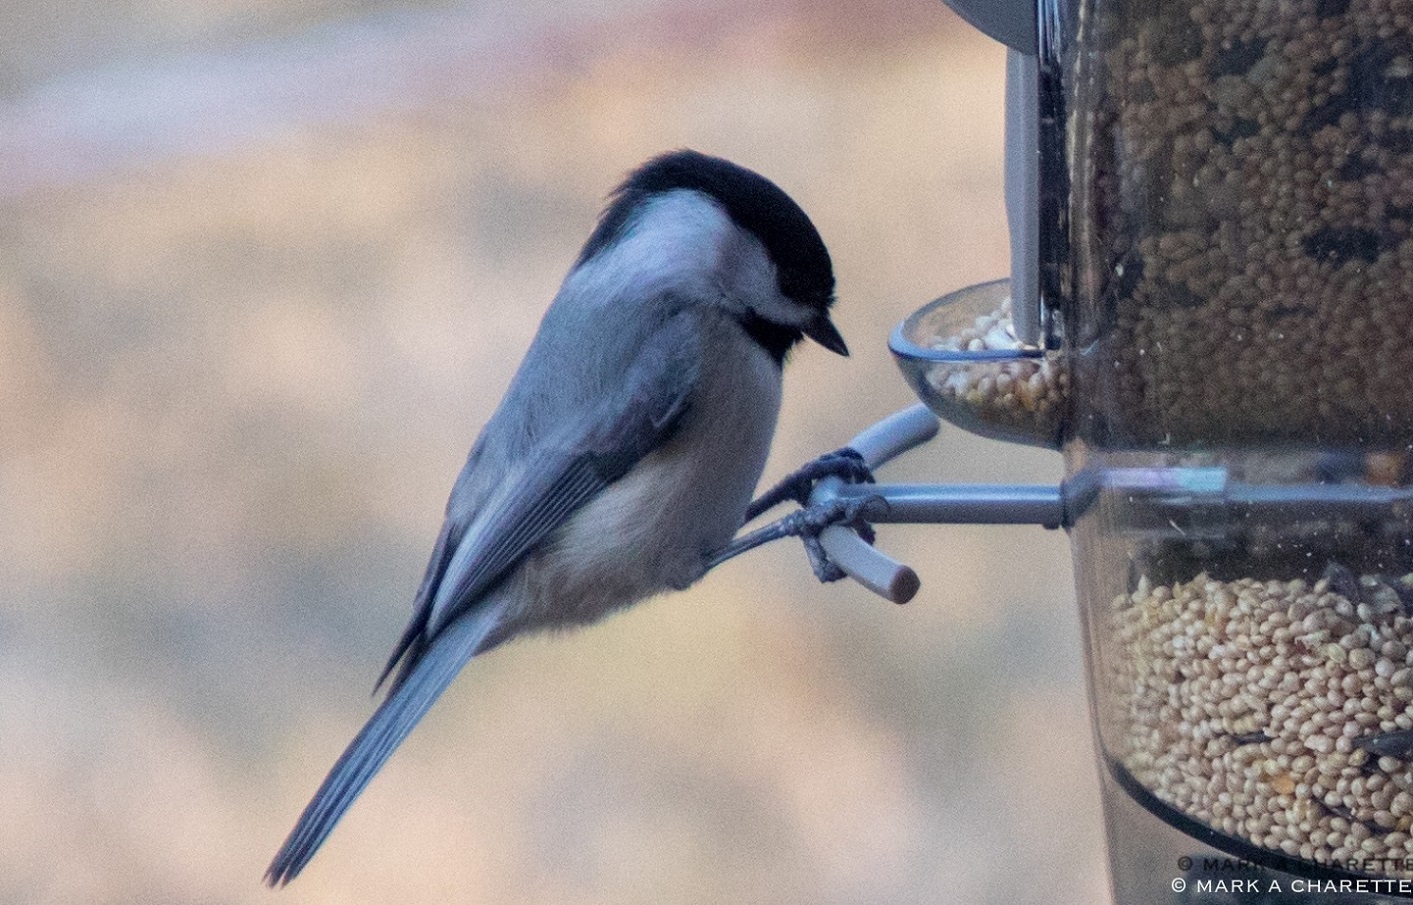 a tiny bird sitting on a bird feeder